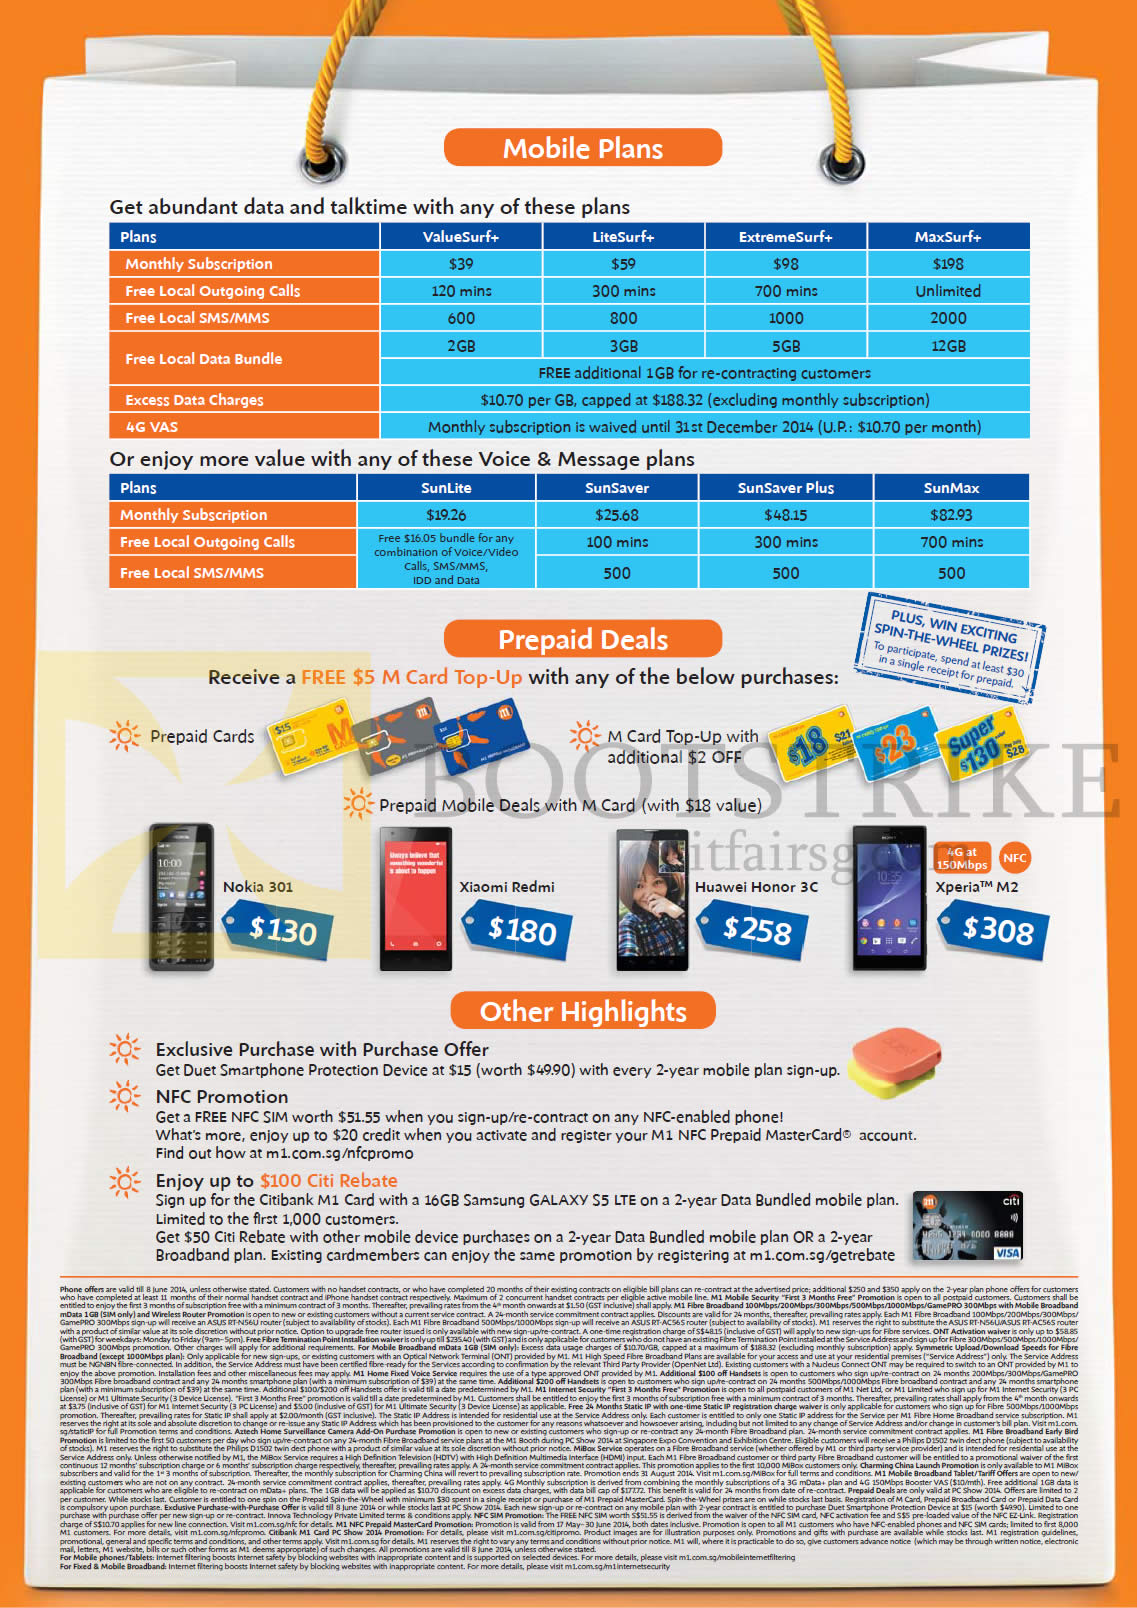 PC SHOW 2014 price list image brochure of M1 Mobile Plans, Prepaid Deals Nokia 301, Xiamo Redmi, Huawei Honor 3C, Sony Xperia M2